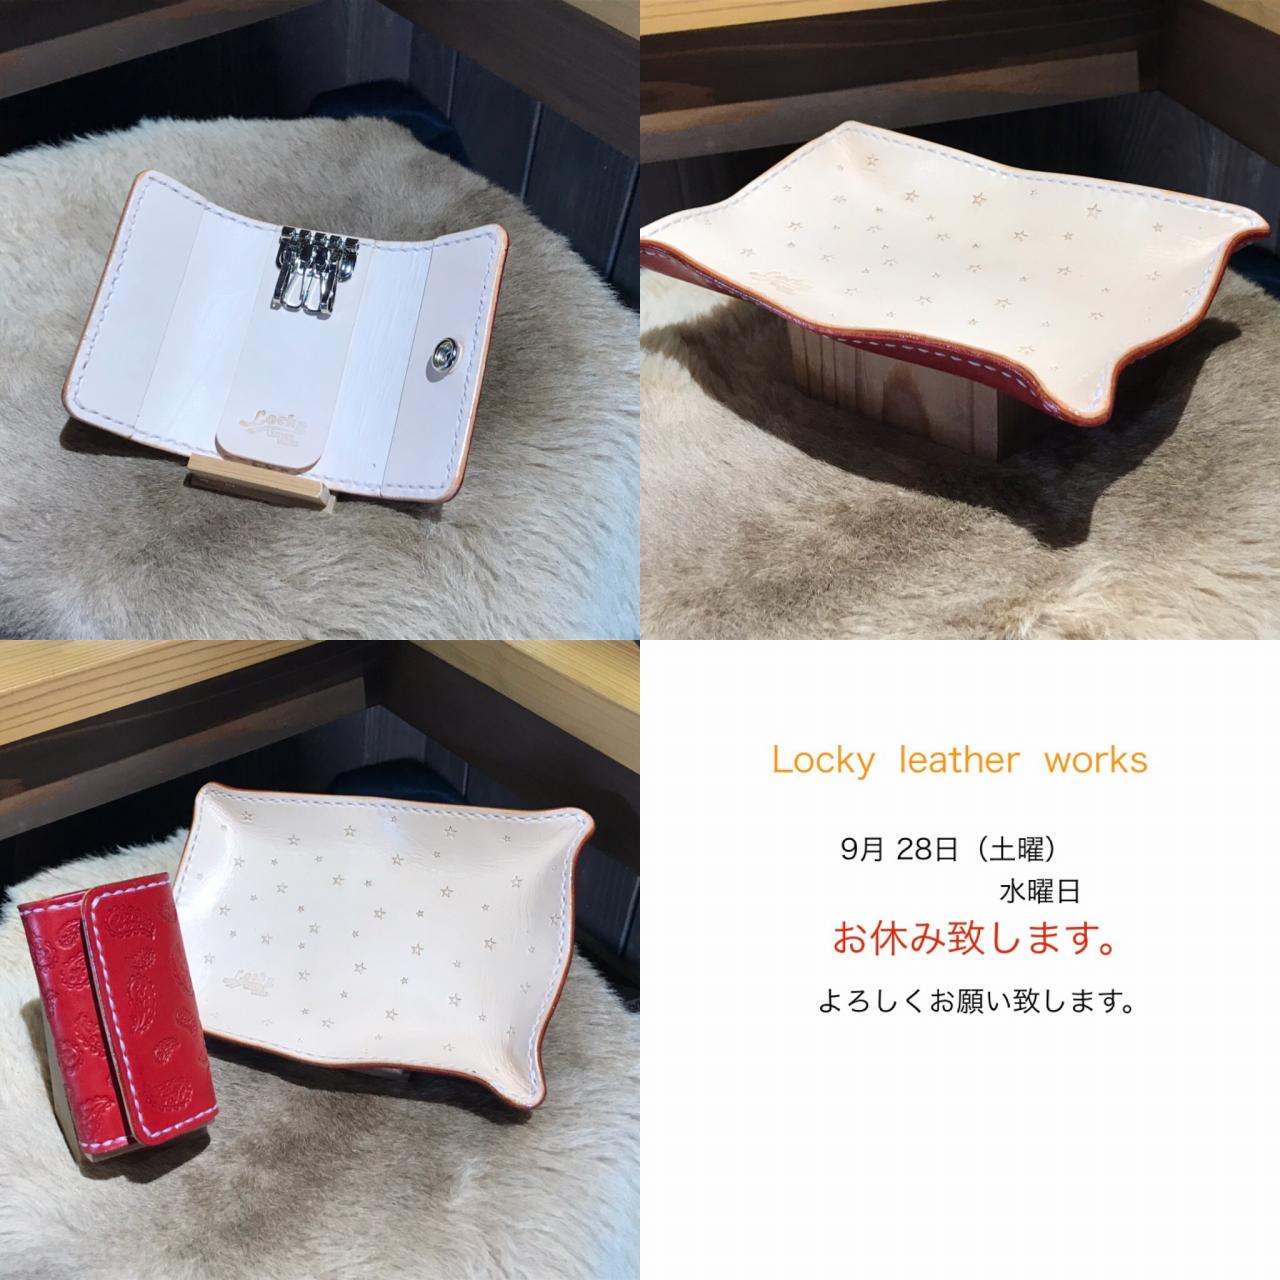 Locky LEATHER WORKS 【ロッキー レザー ワークス】マネートレイ、キーケース#熊本#菊池 市#七城#leather#レザー